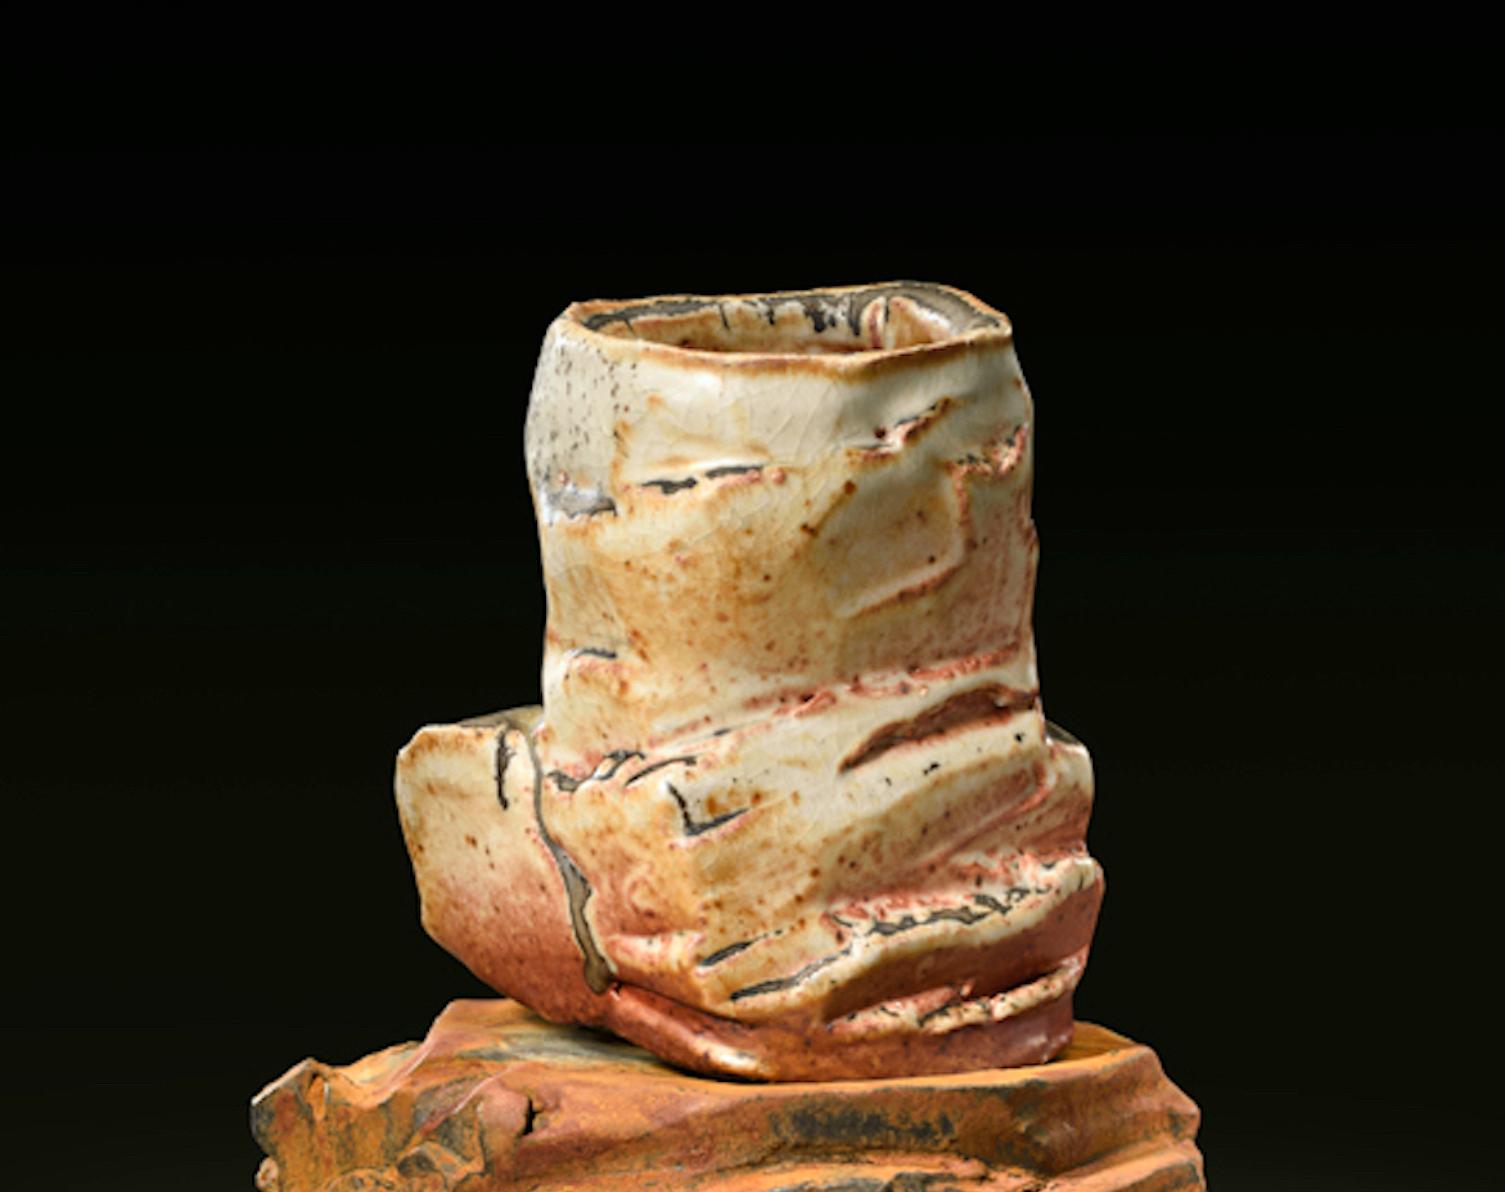 American Richard Hirsch Ceramic Scholar Rock Cup Sculpture #19, 2016 For Sale